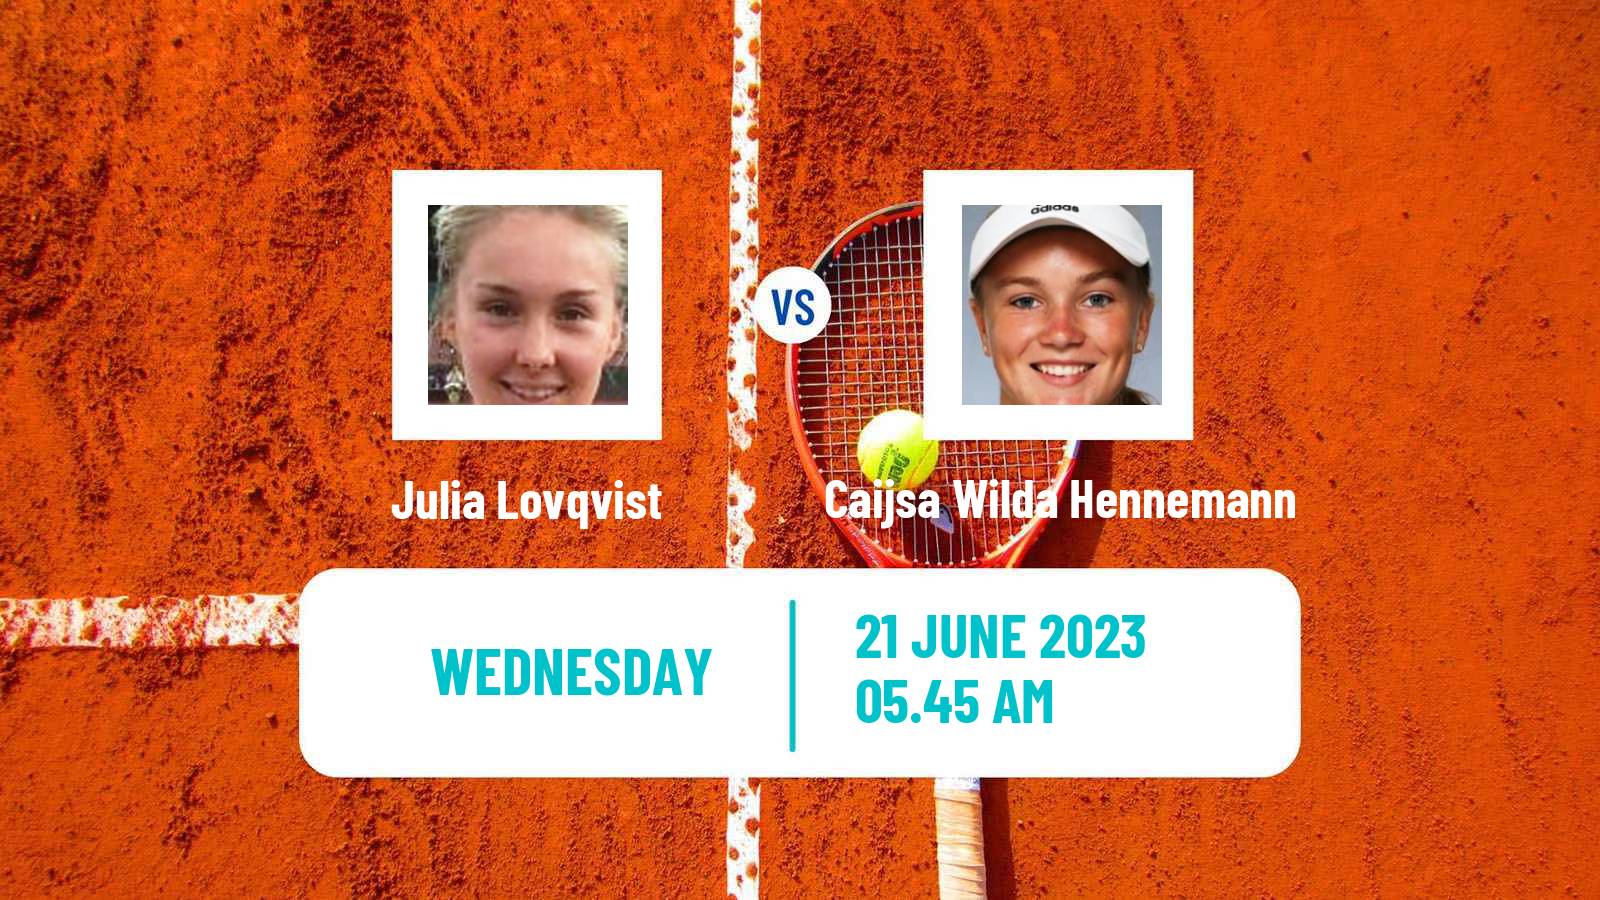 Tennis ITF W40 Ystad Women Julia Lovqvist - Caijsa Wilda Hennemann